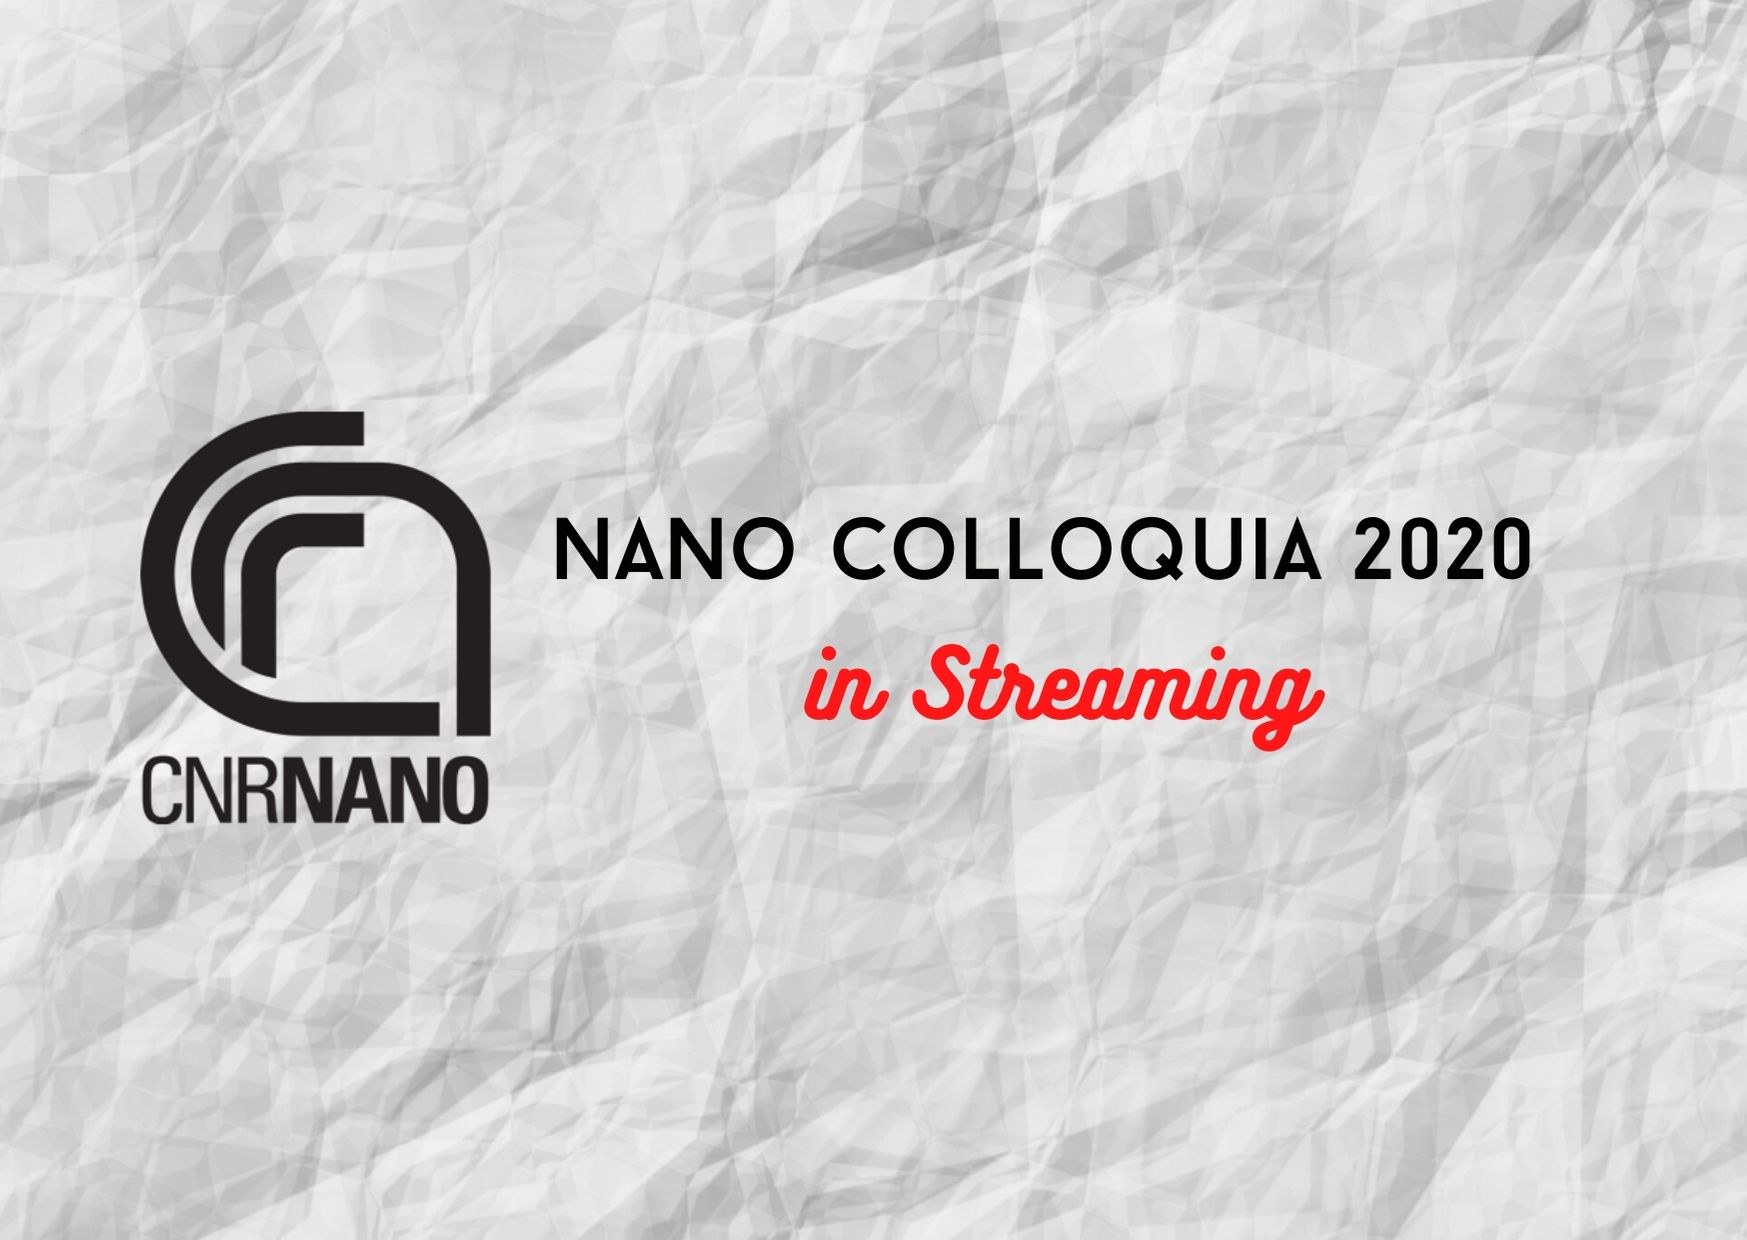 Nano Colloquia in streaming